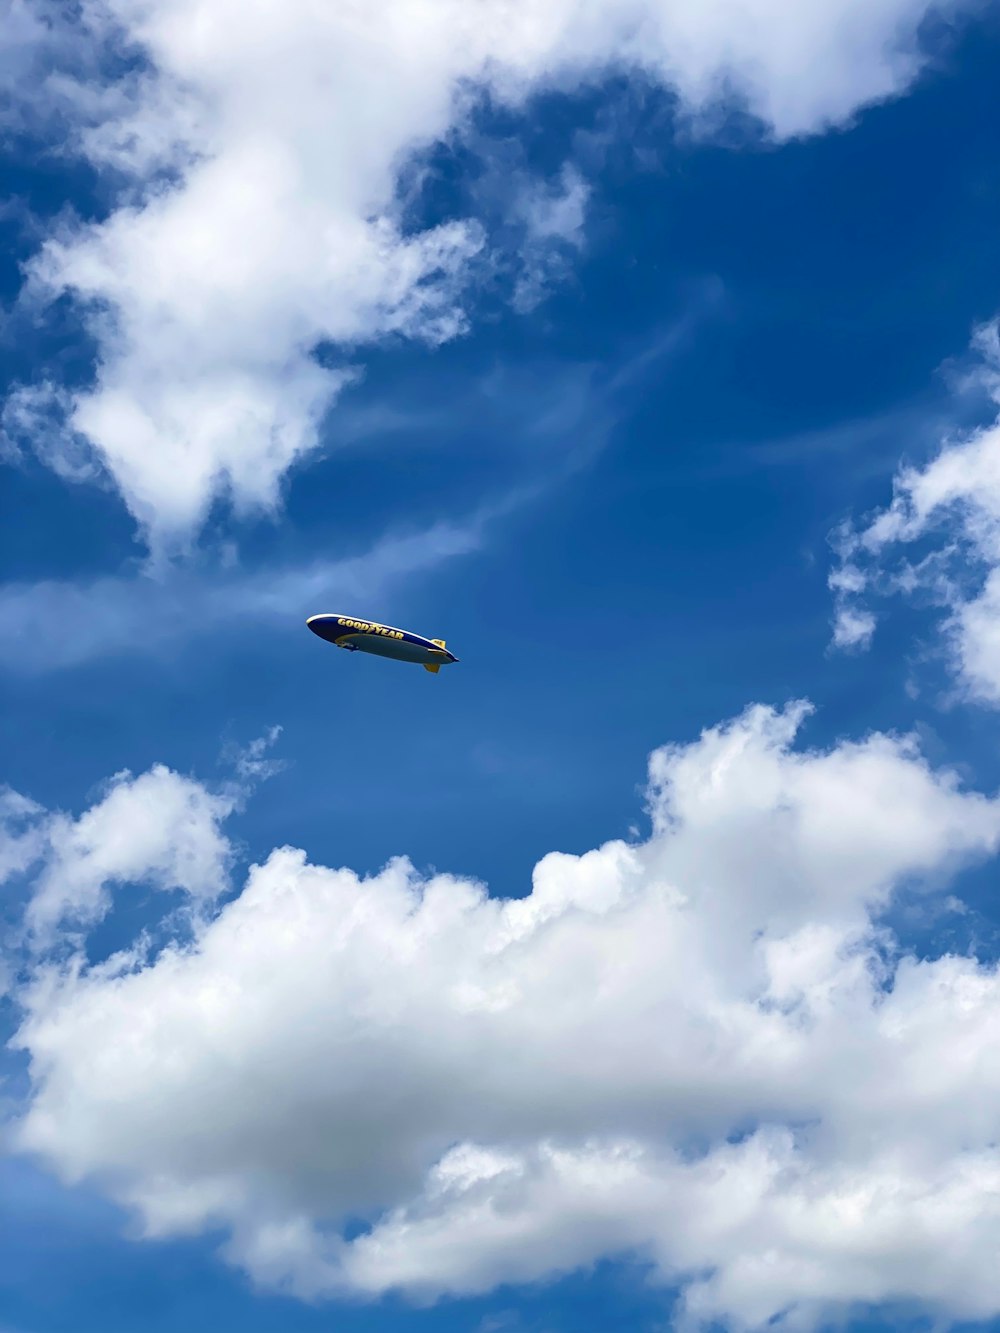 an airplane flying through a cloudy blue sky